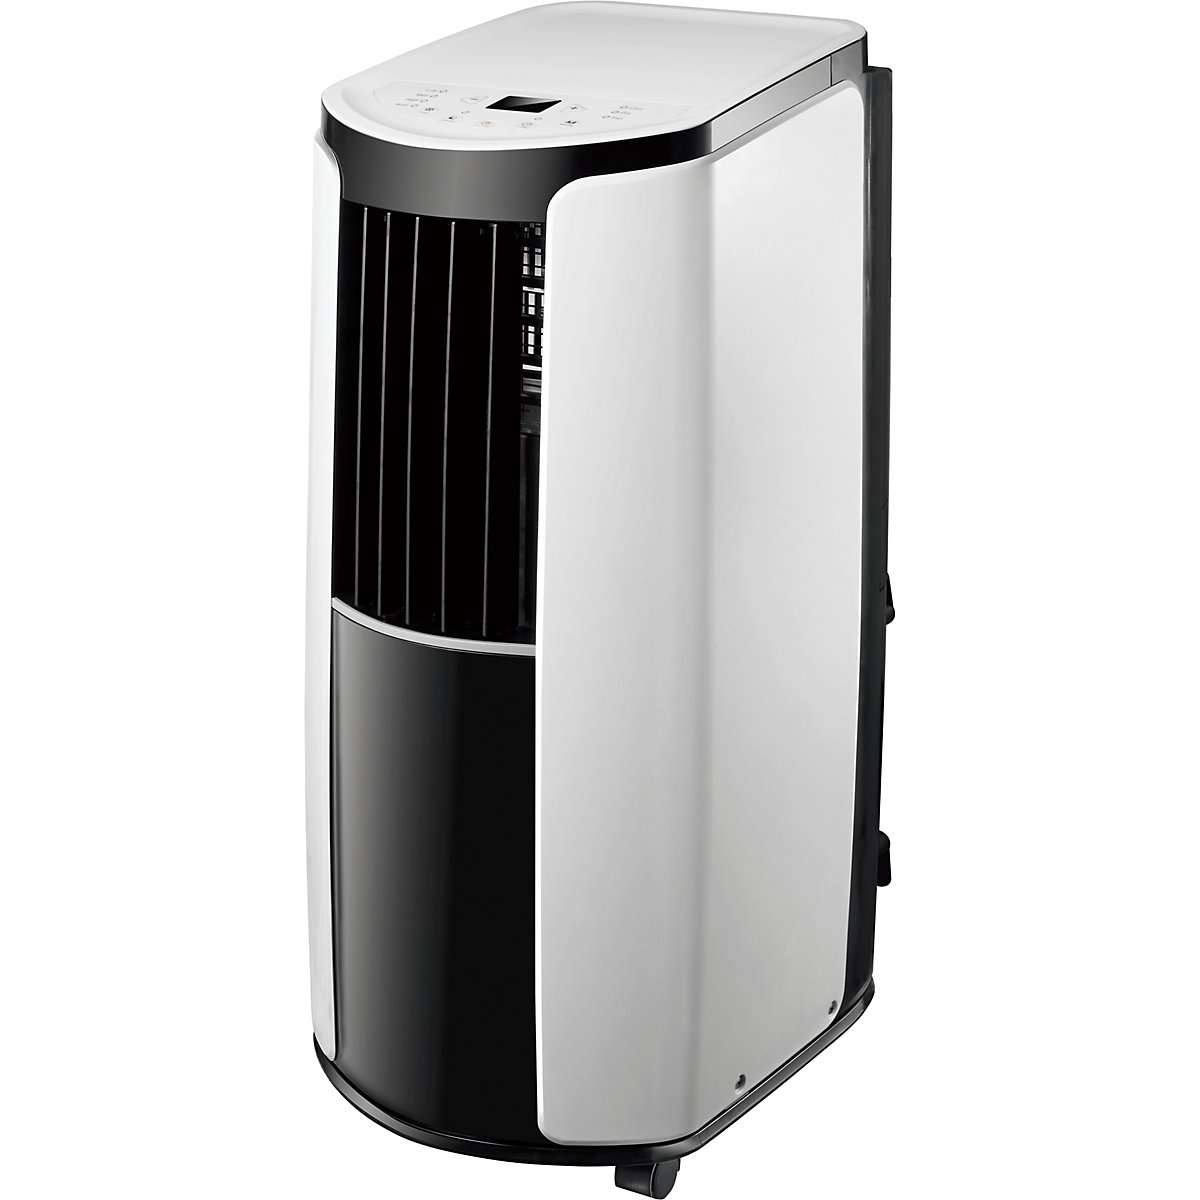 Mobiele ECO-airconditioning 10000 BTU – GREE, 3-in-1-apparaat, koelvermogen 2,9 kW, energieklasse A+, wit/zwart